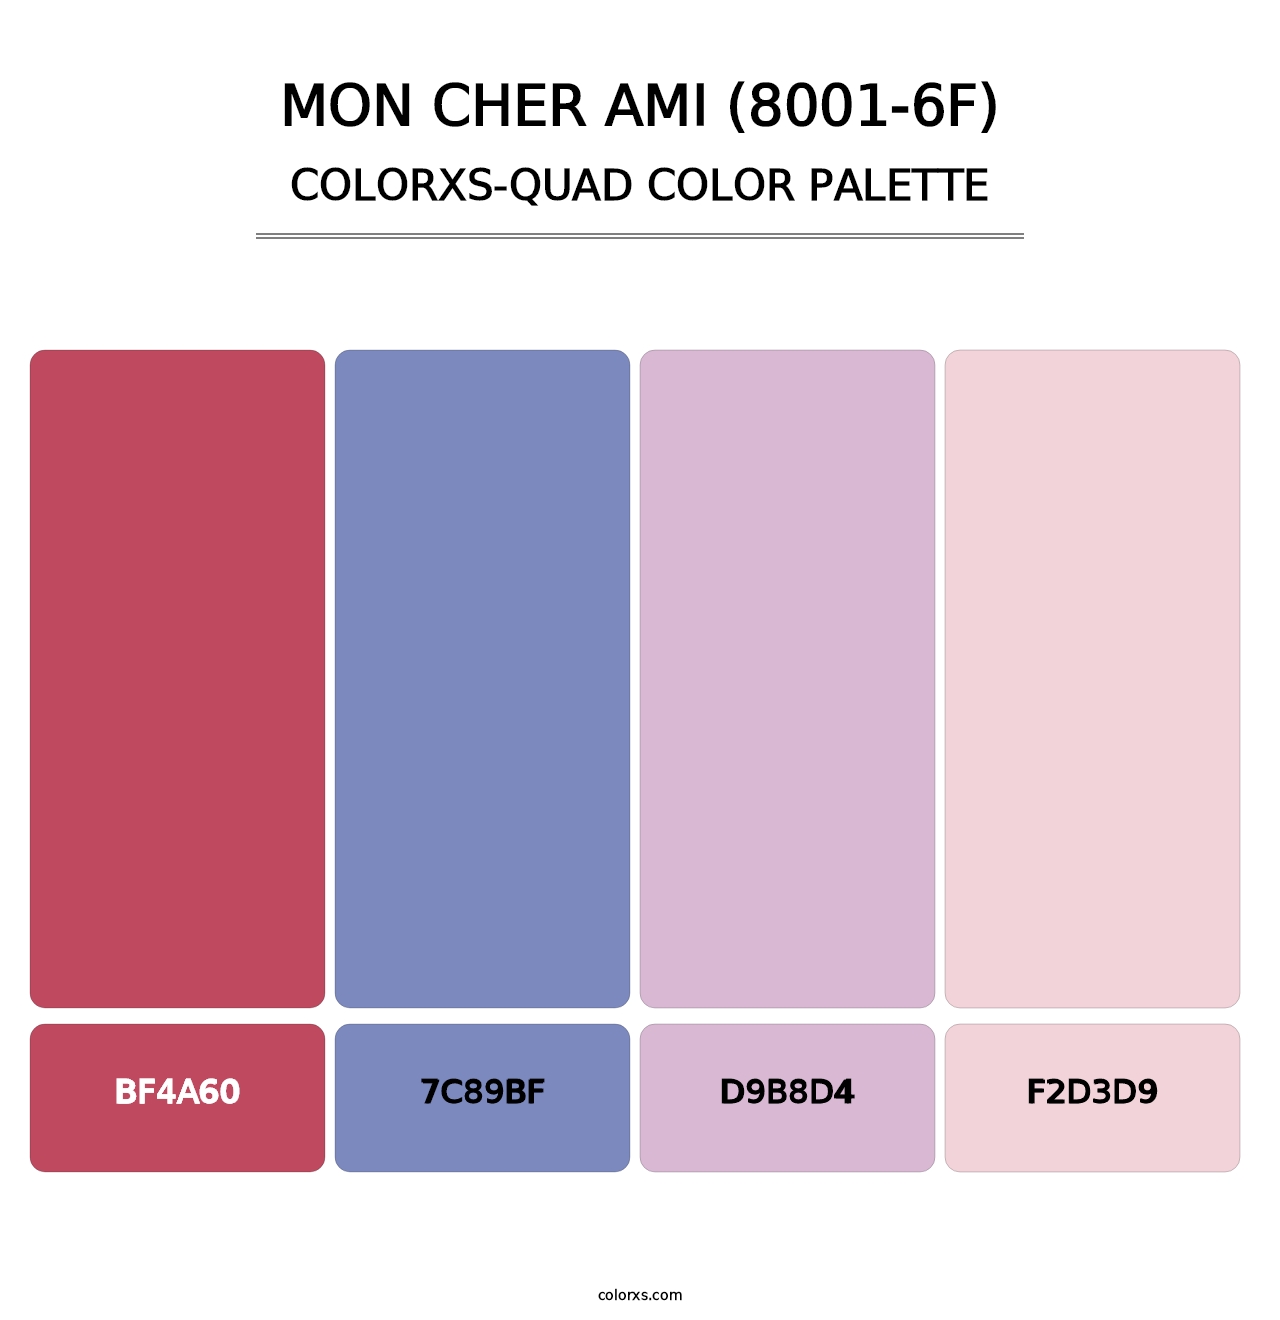 Mon Cher Ami (8001-6F) - Colorxs Quad Palette